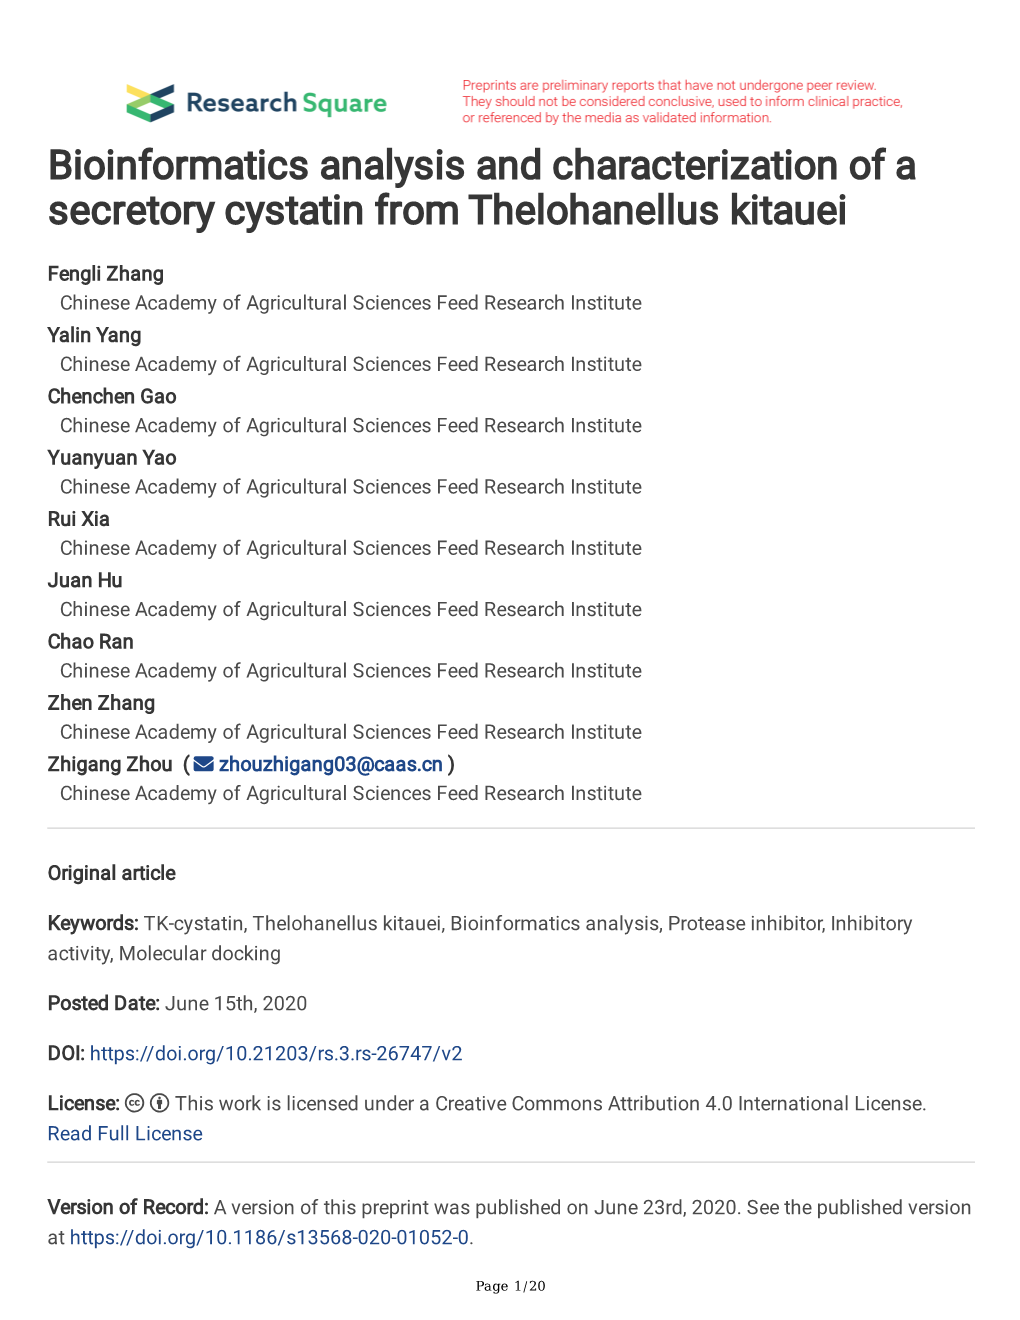 Bioinformatics Analysis and Characterization of a Secretory Cystatin from Thelohanellus Kitauei